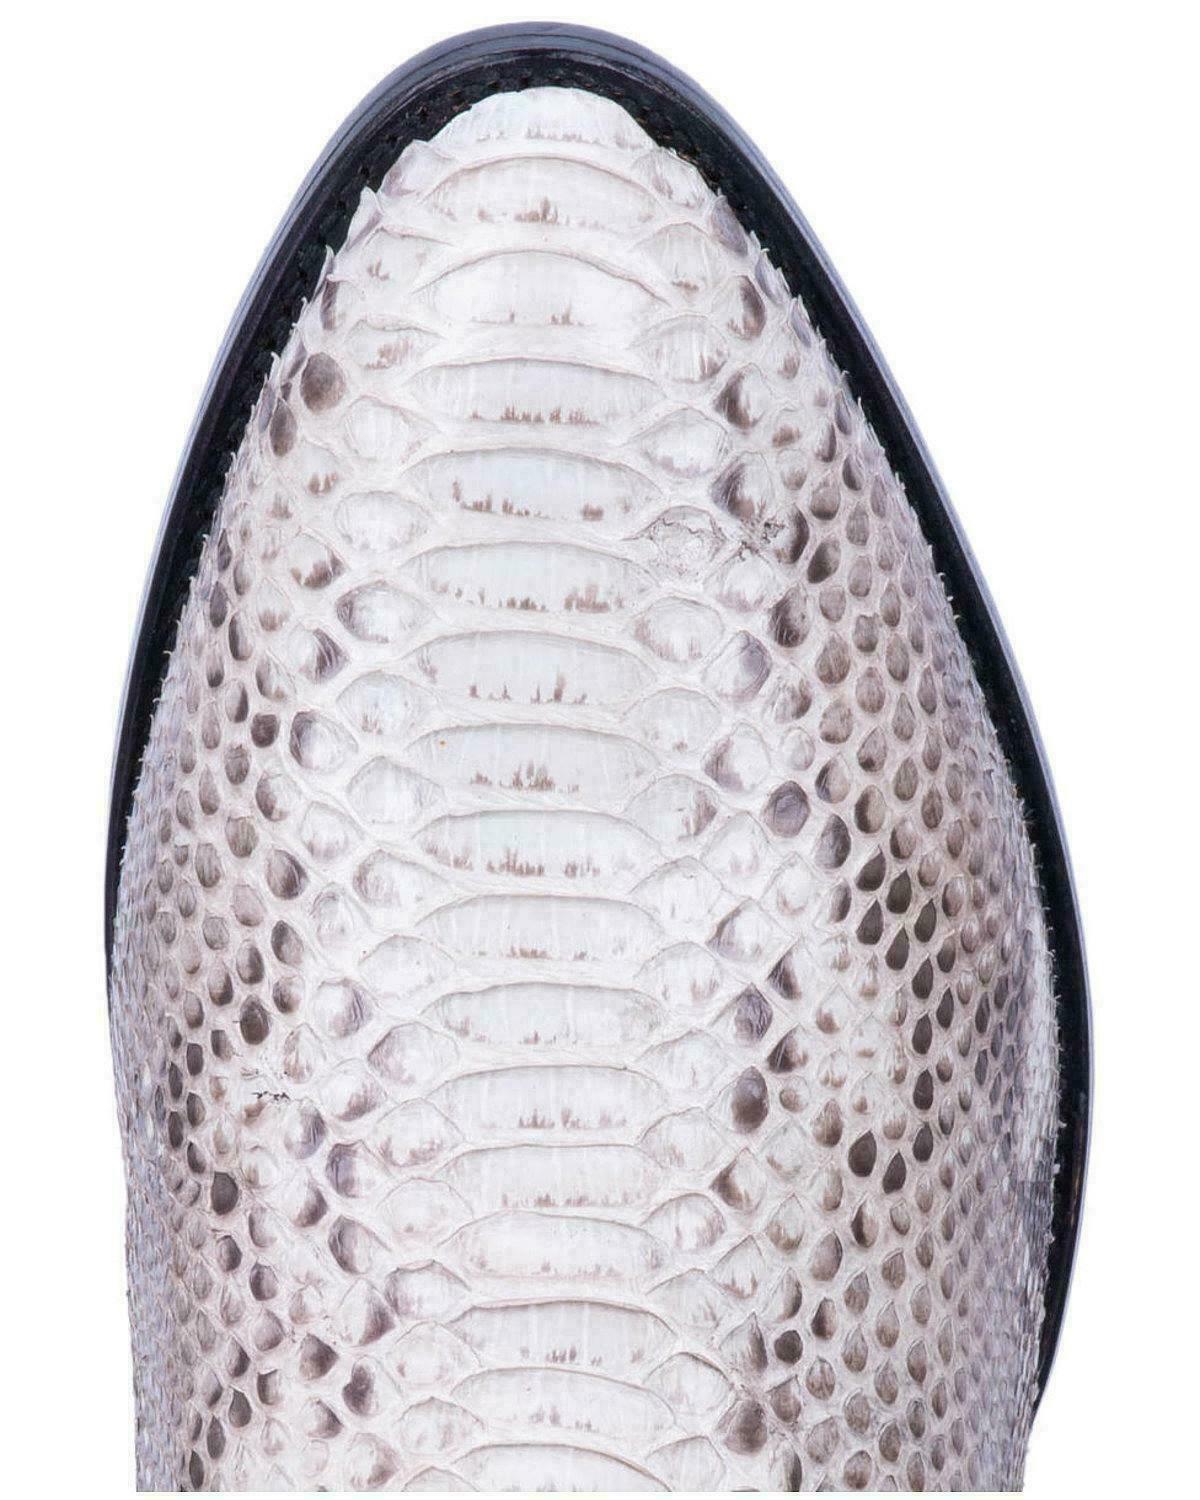 Men's Dan Post Natural Black/White Genuine Python R Toe Boots DP3036